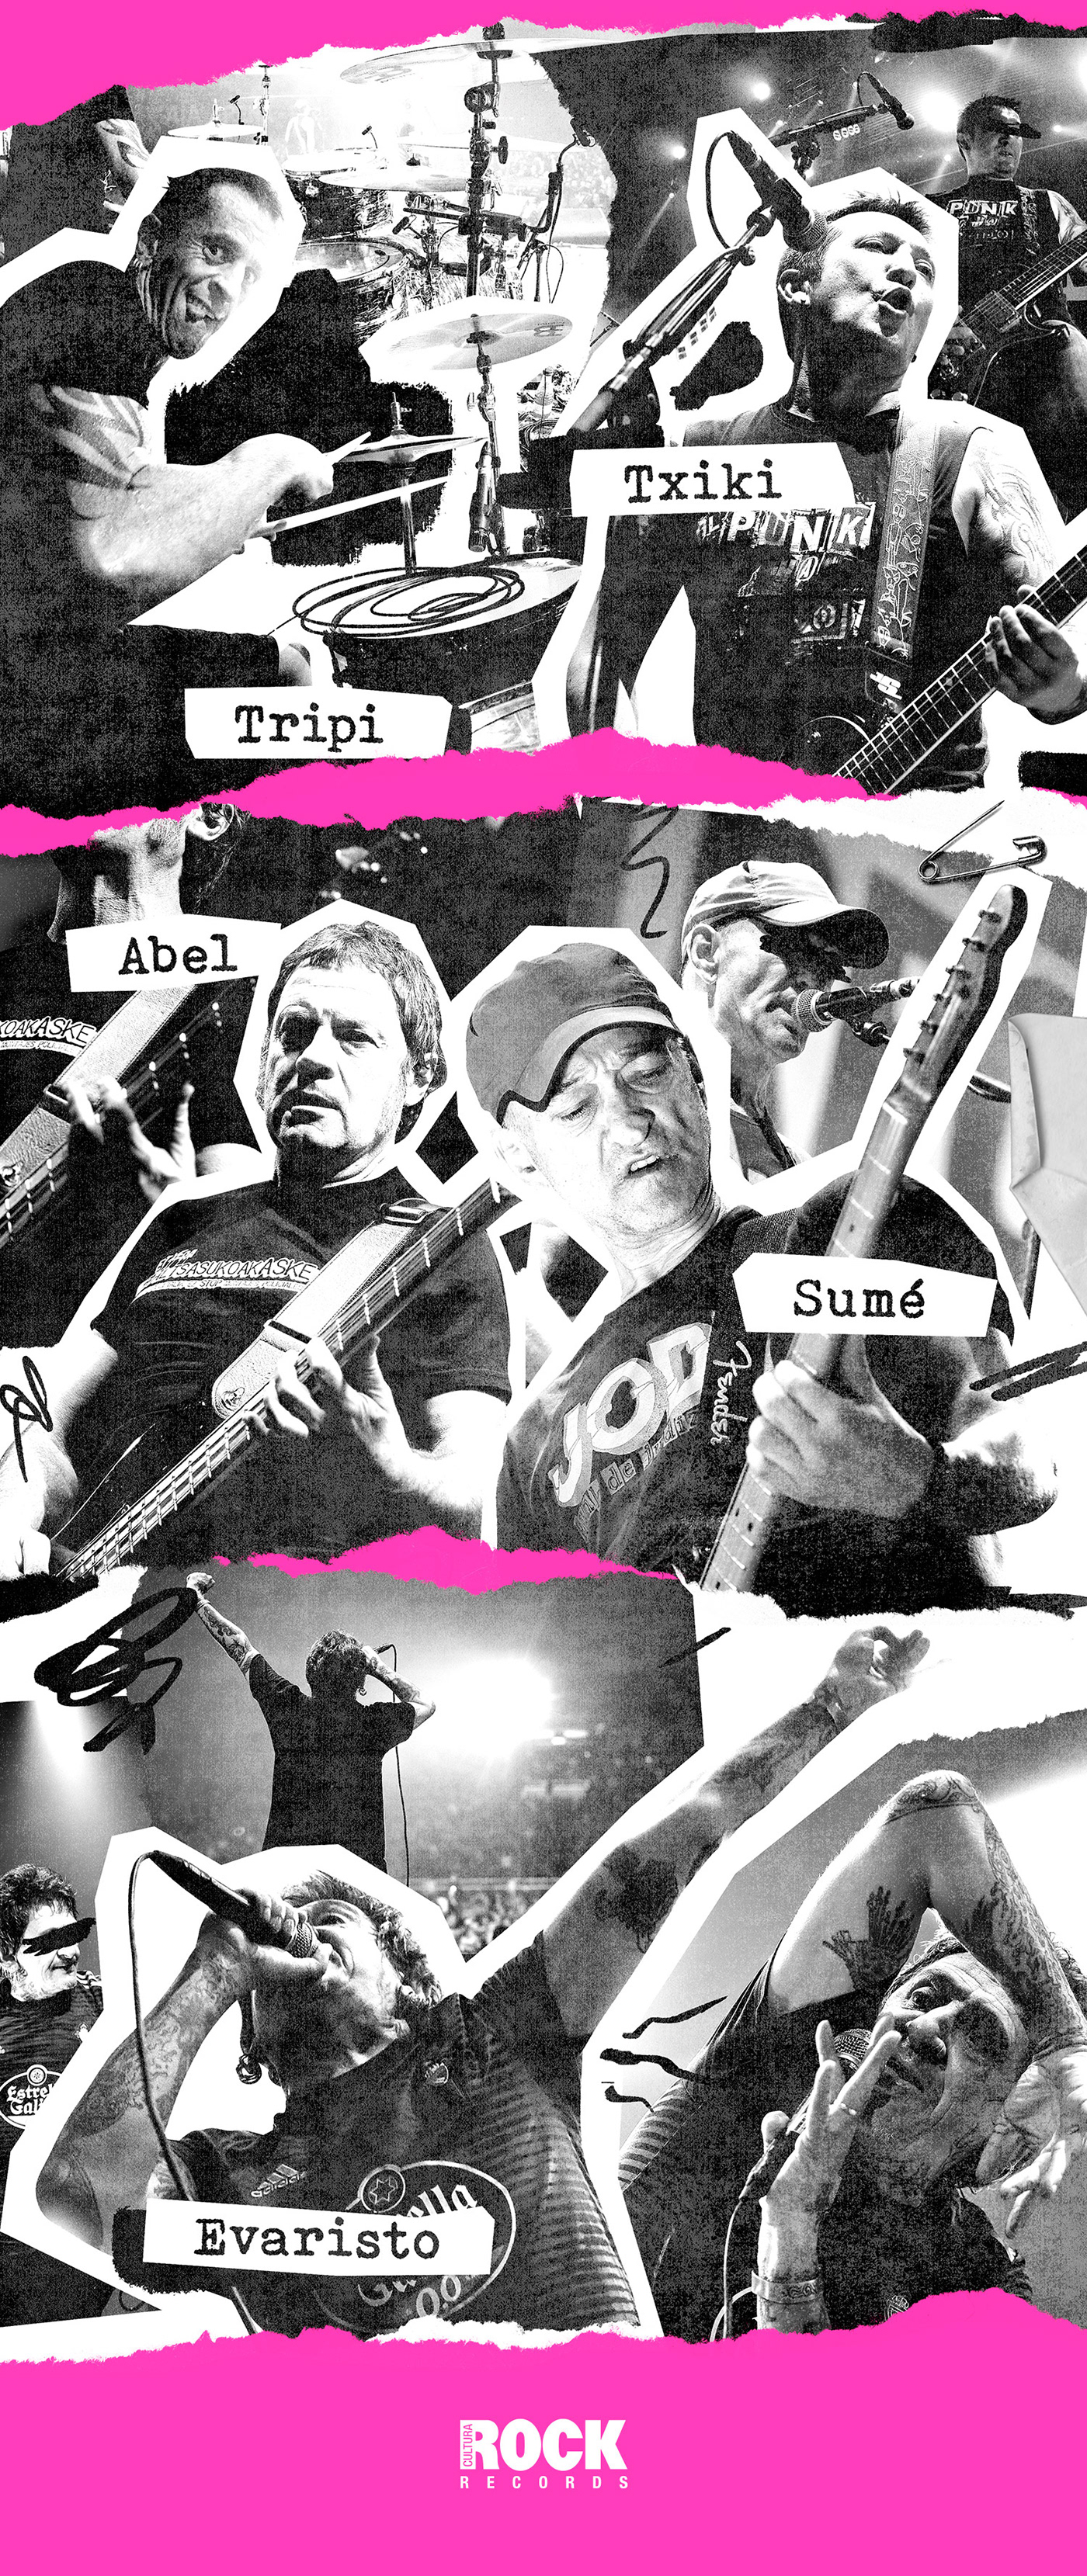 DVD evaristo LA POLLA RECORDS live punk record rock vinyl barakaldo bilbao